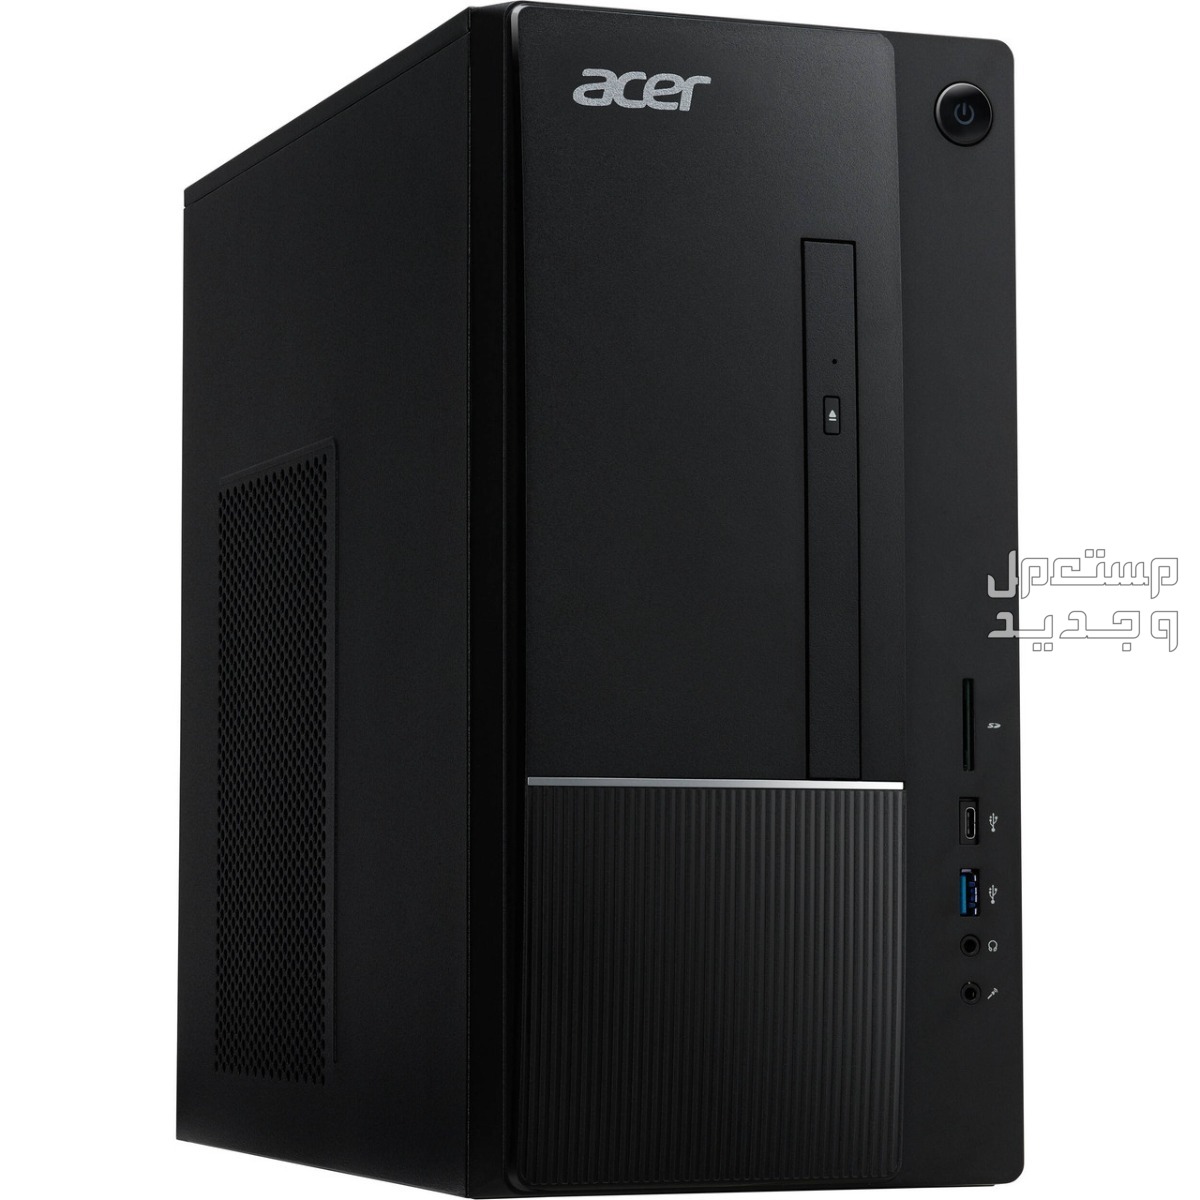 تعرف على جهاز كمبيوتر مكتبي Acer Aspire TC-885-UA91 في السودان Acer Aspire TC-885-UA91